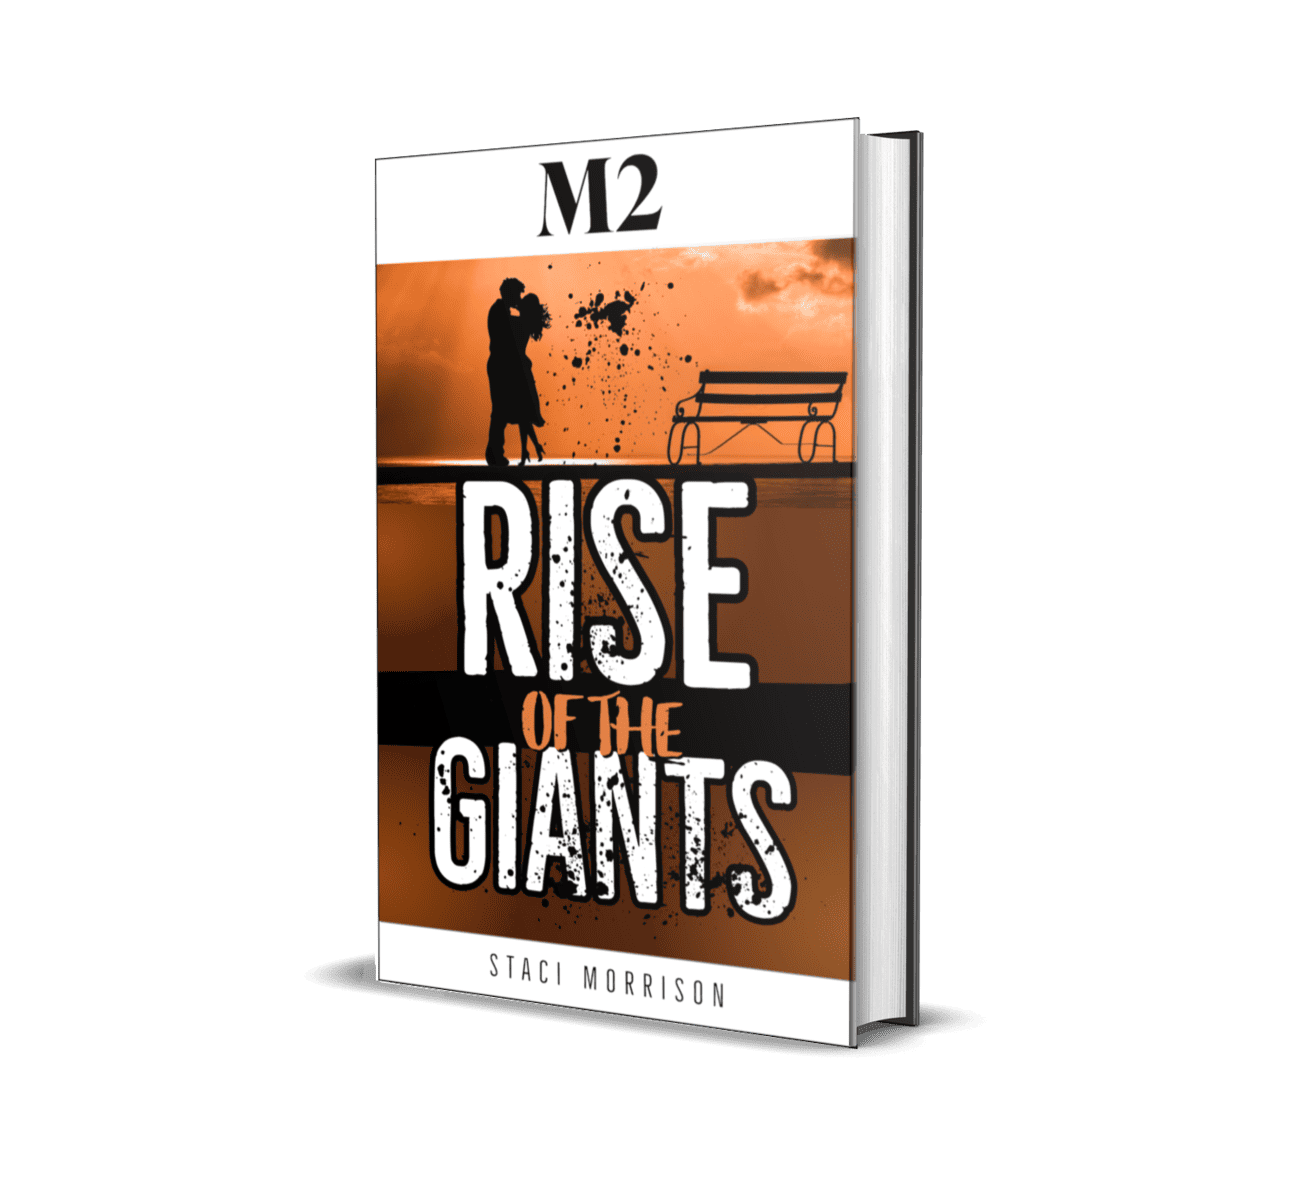 Millennium series, m2-rise of the giants, staci morrison